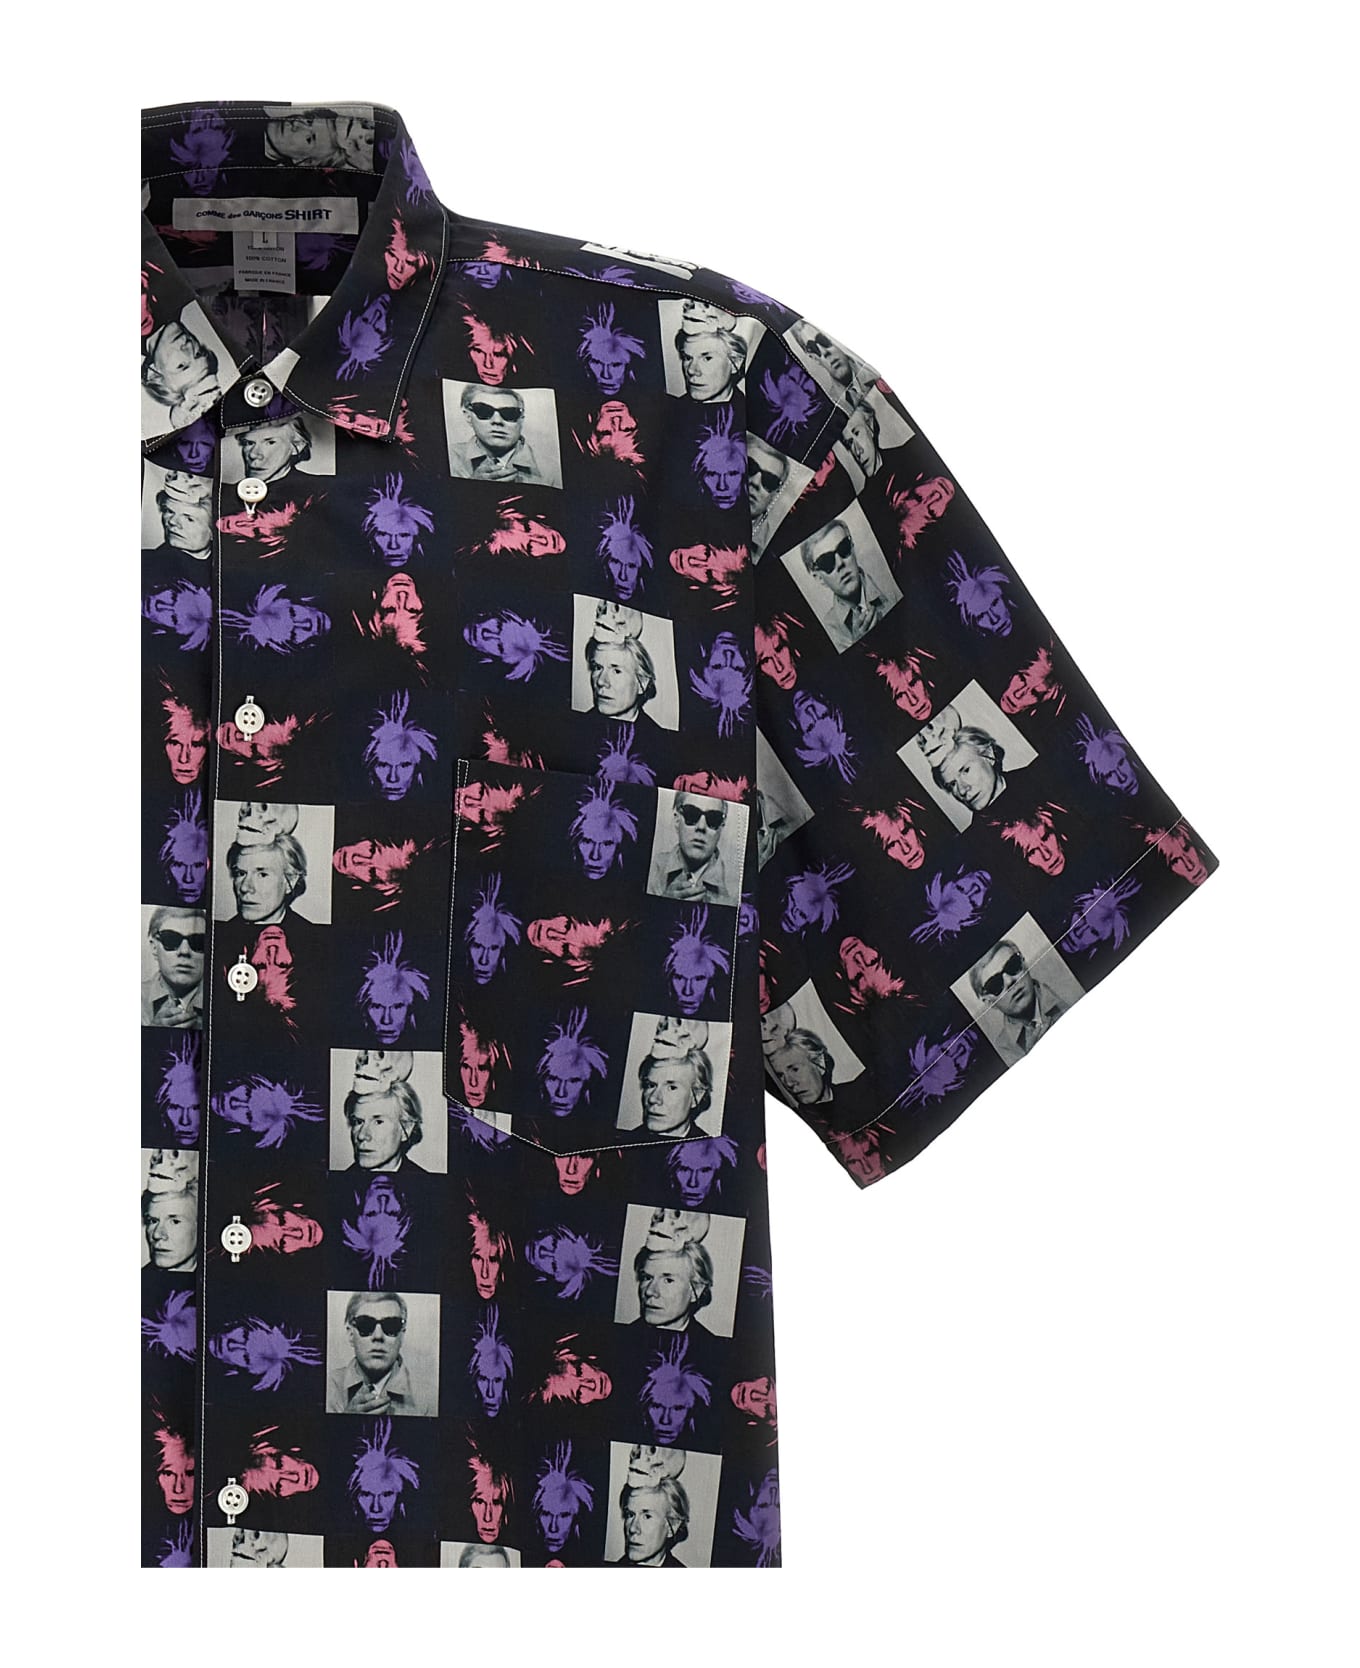 Comme des Garçons Shirt 'andy Warhol' Shirt - Print